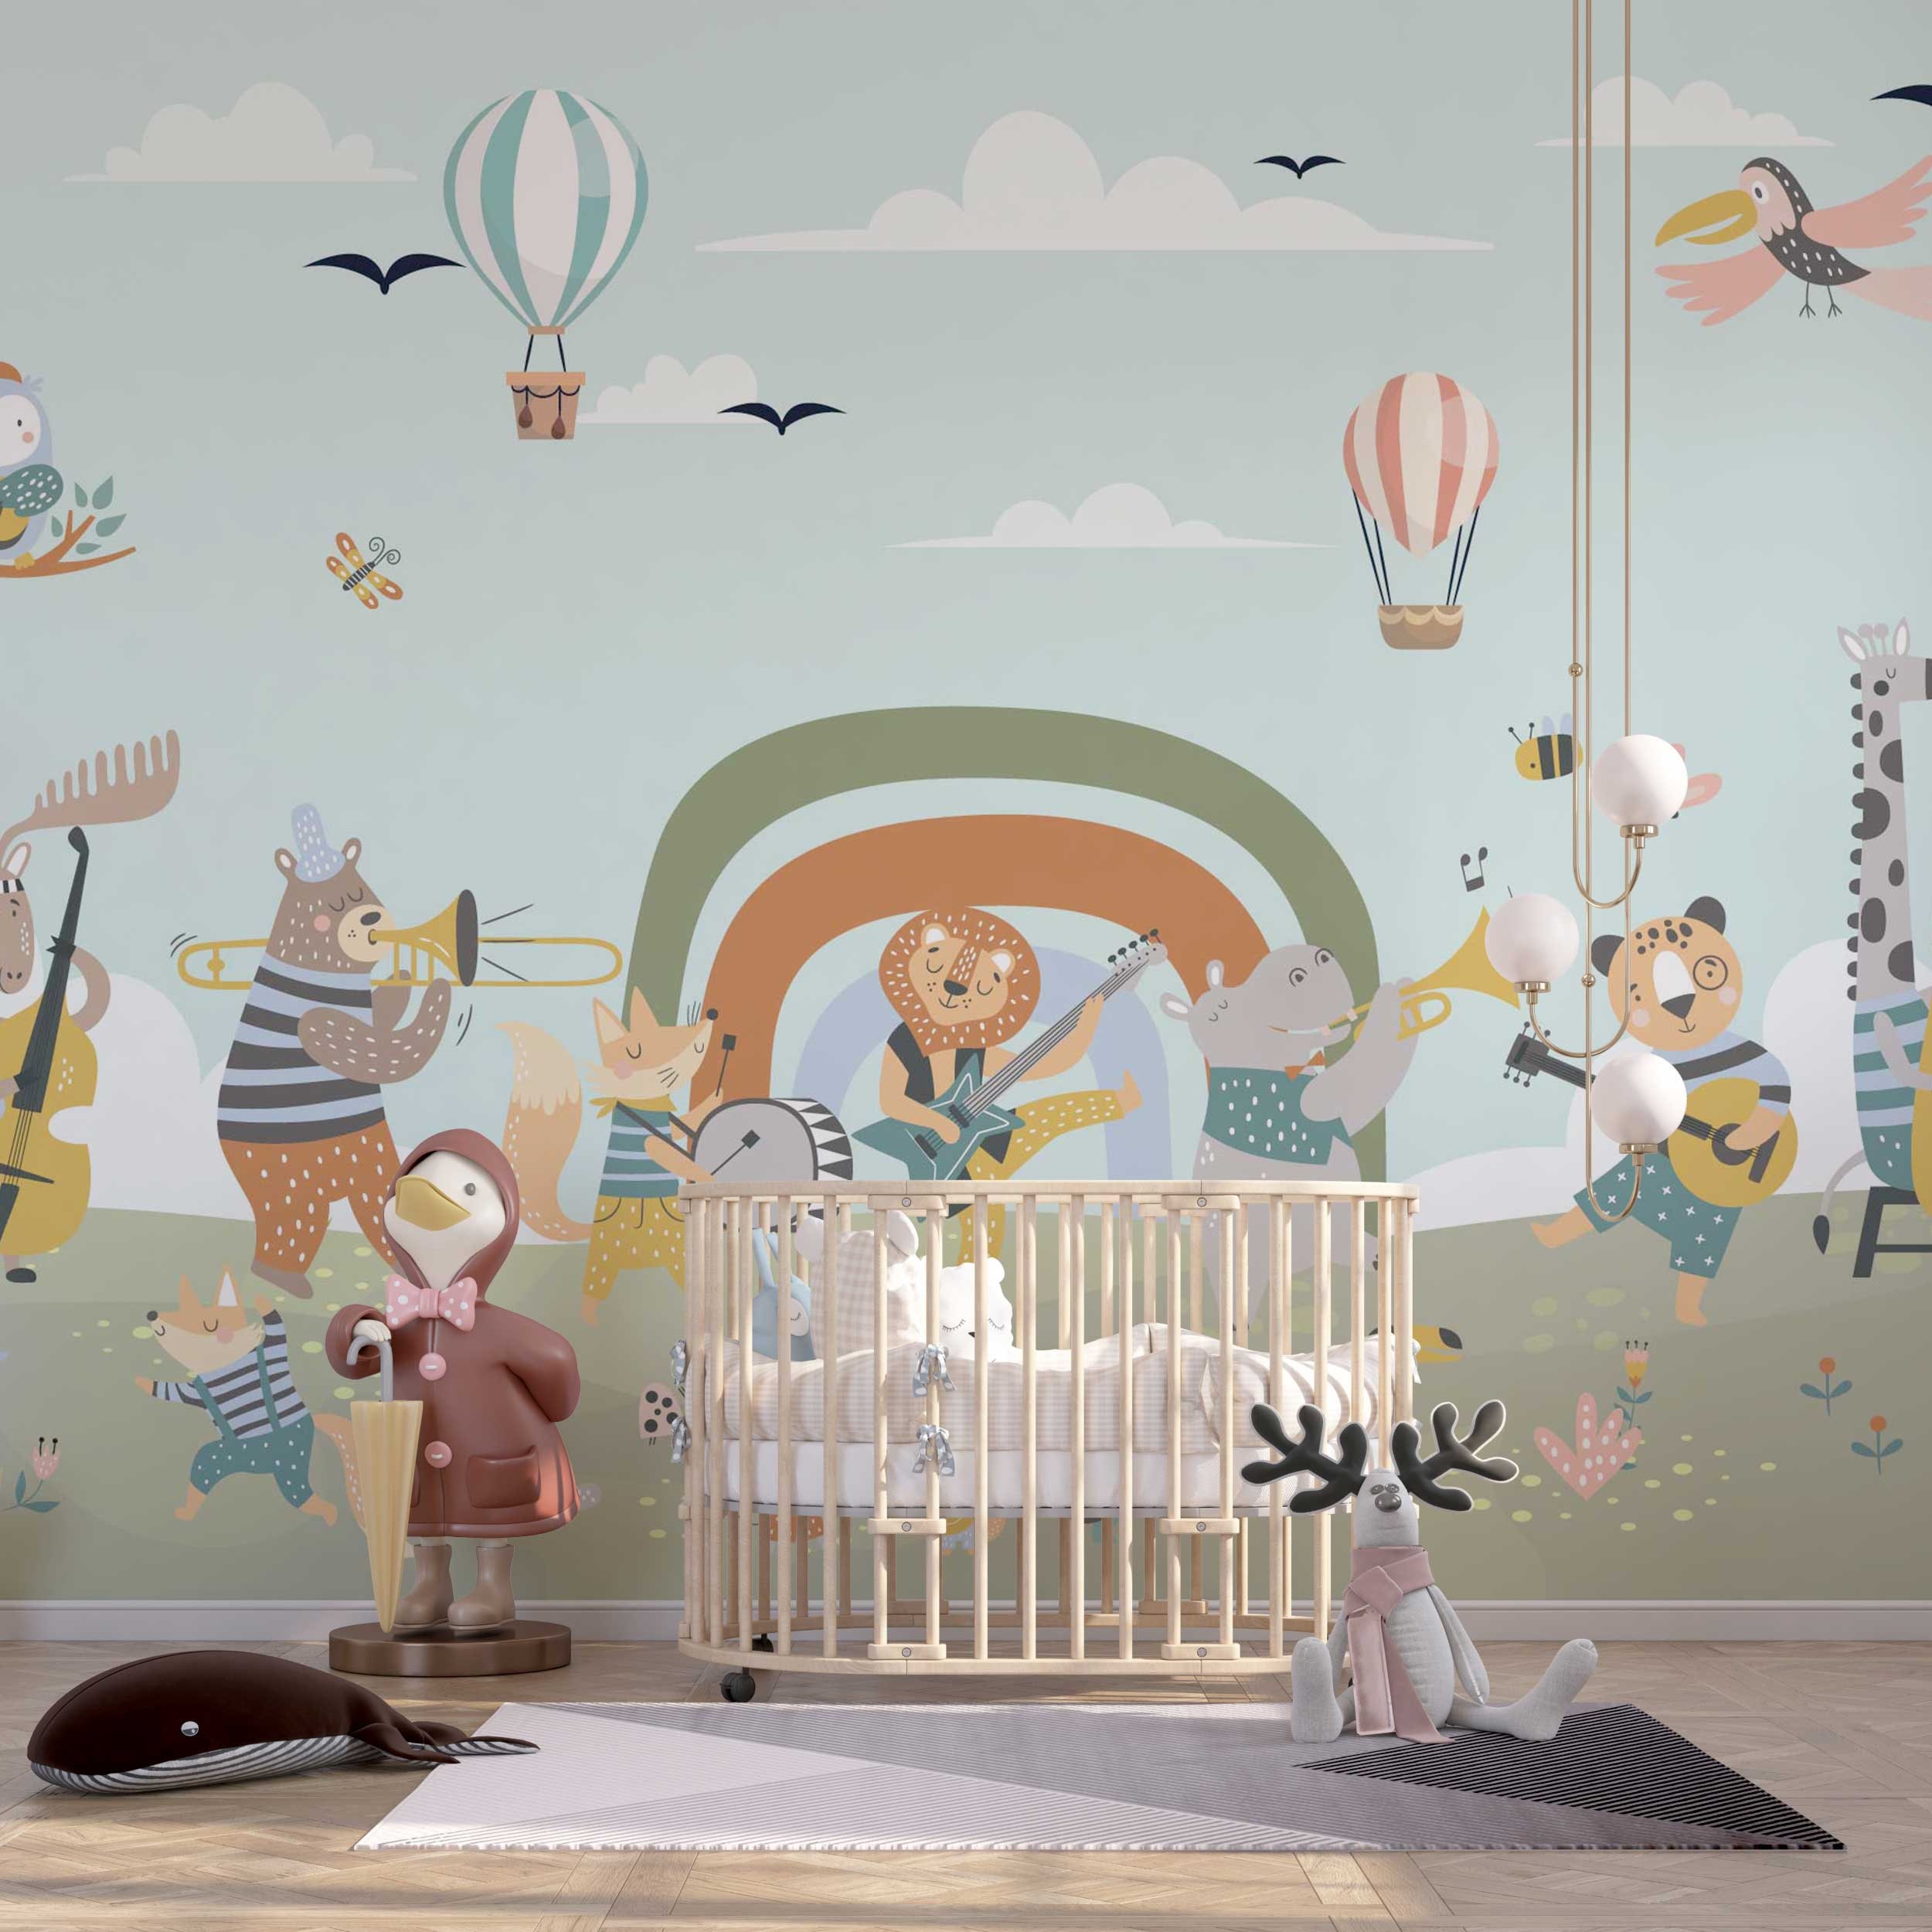 Cute Animals Nursery Wallpaper Musician Animals and Balloons - Etsy